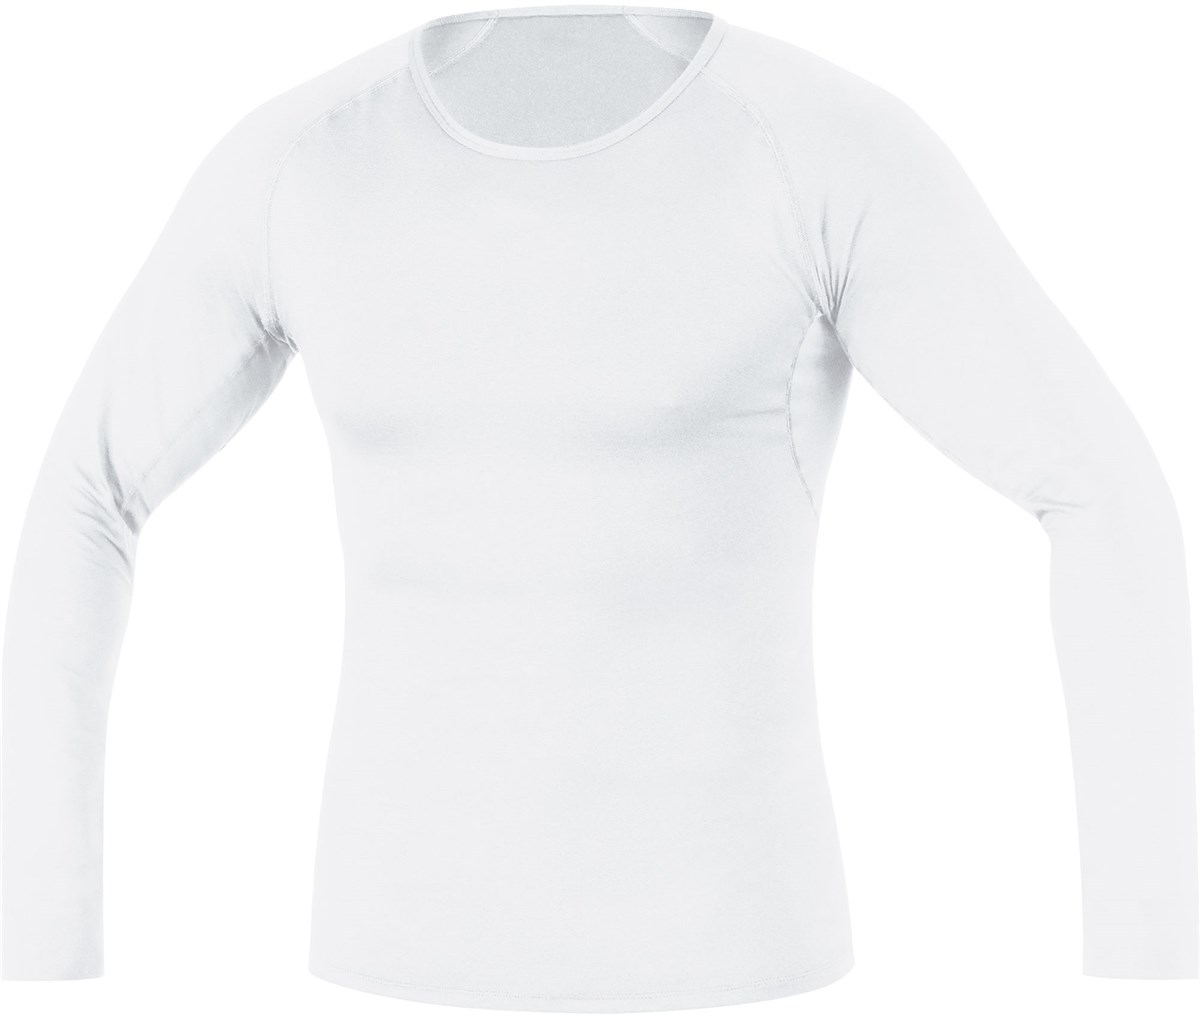 Gore Base Layer Shirt Long AW17 product image